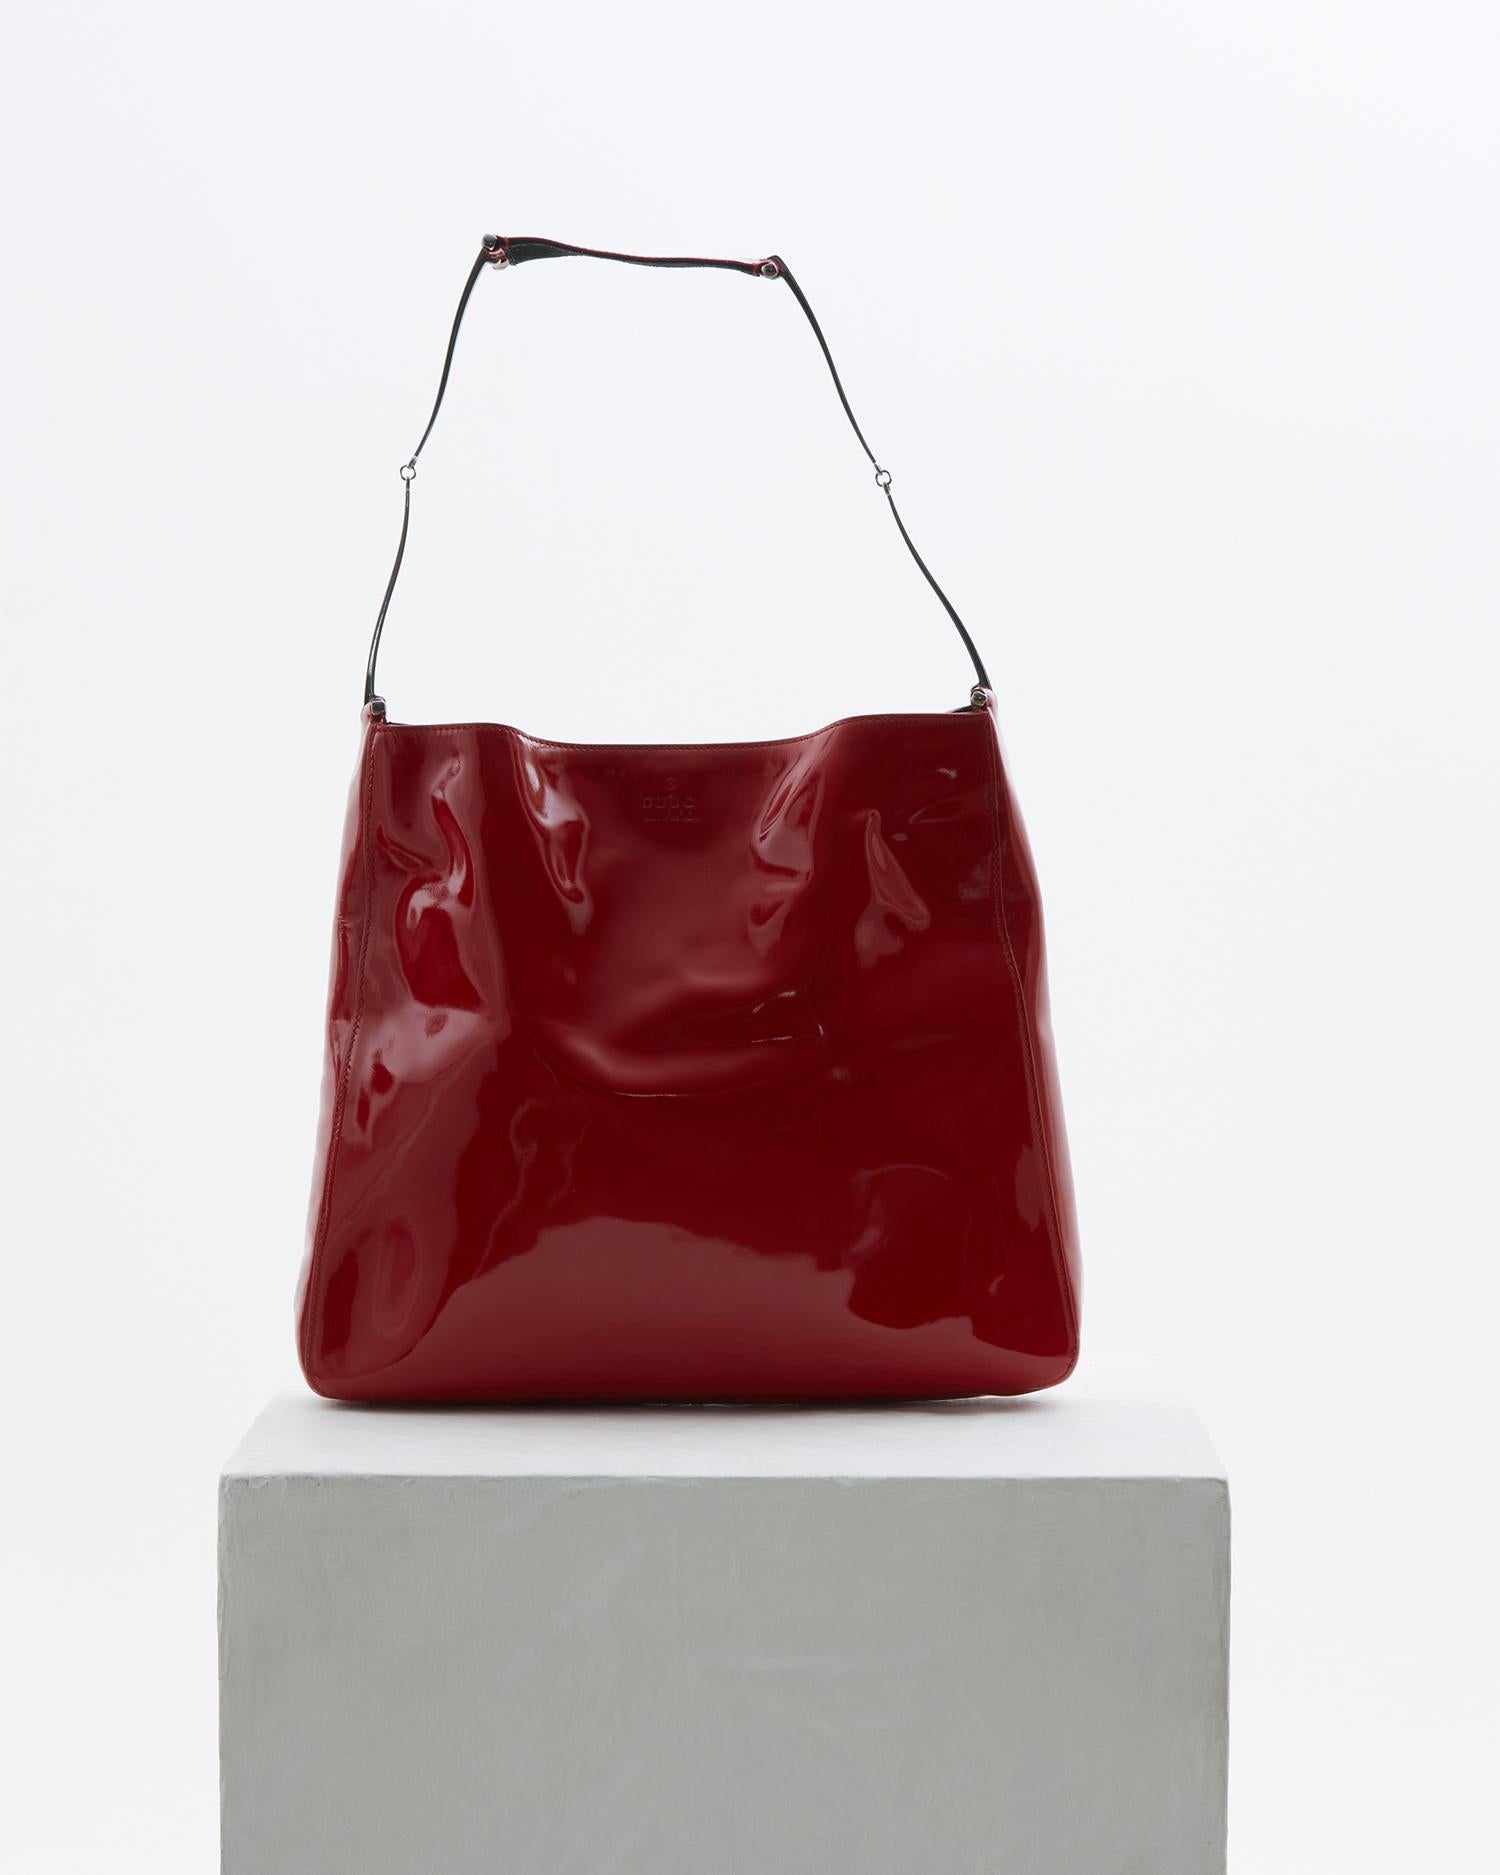 - Designed by Tom Ford 
- Sold by Skof.Archive
- Metallic ring shoulder bag
- Red Patent leather shoulder bag 
- Magnetic snap closure
- Comes with dust bag

Composition:
100% Leather

Measurements:
Height 30 cm / 12”
Dept 5 cm /2”
Length 34 cm / 13”